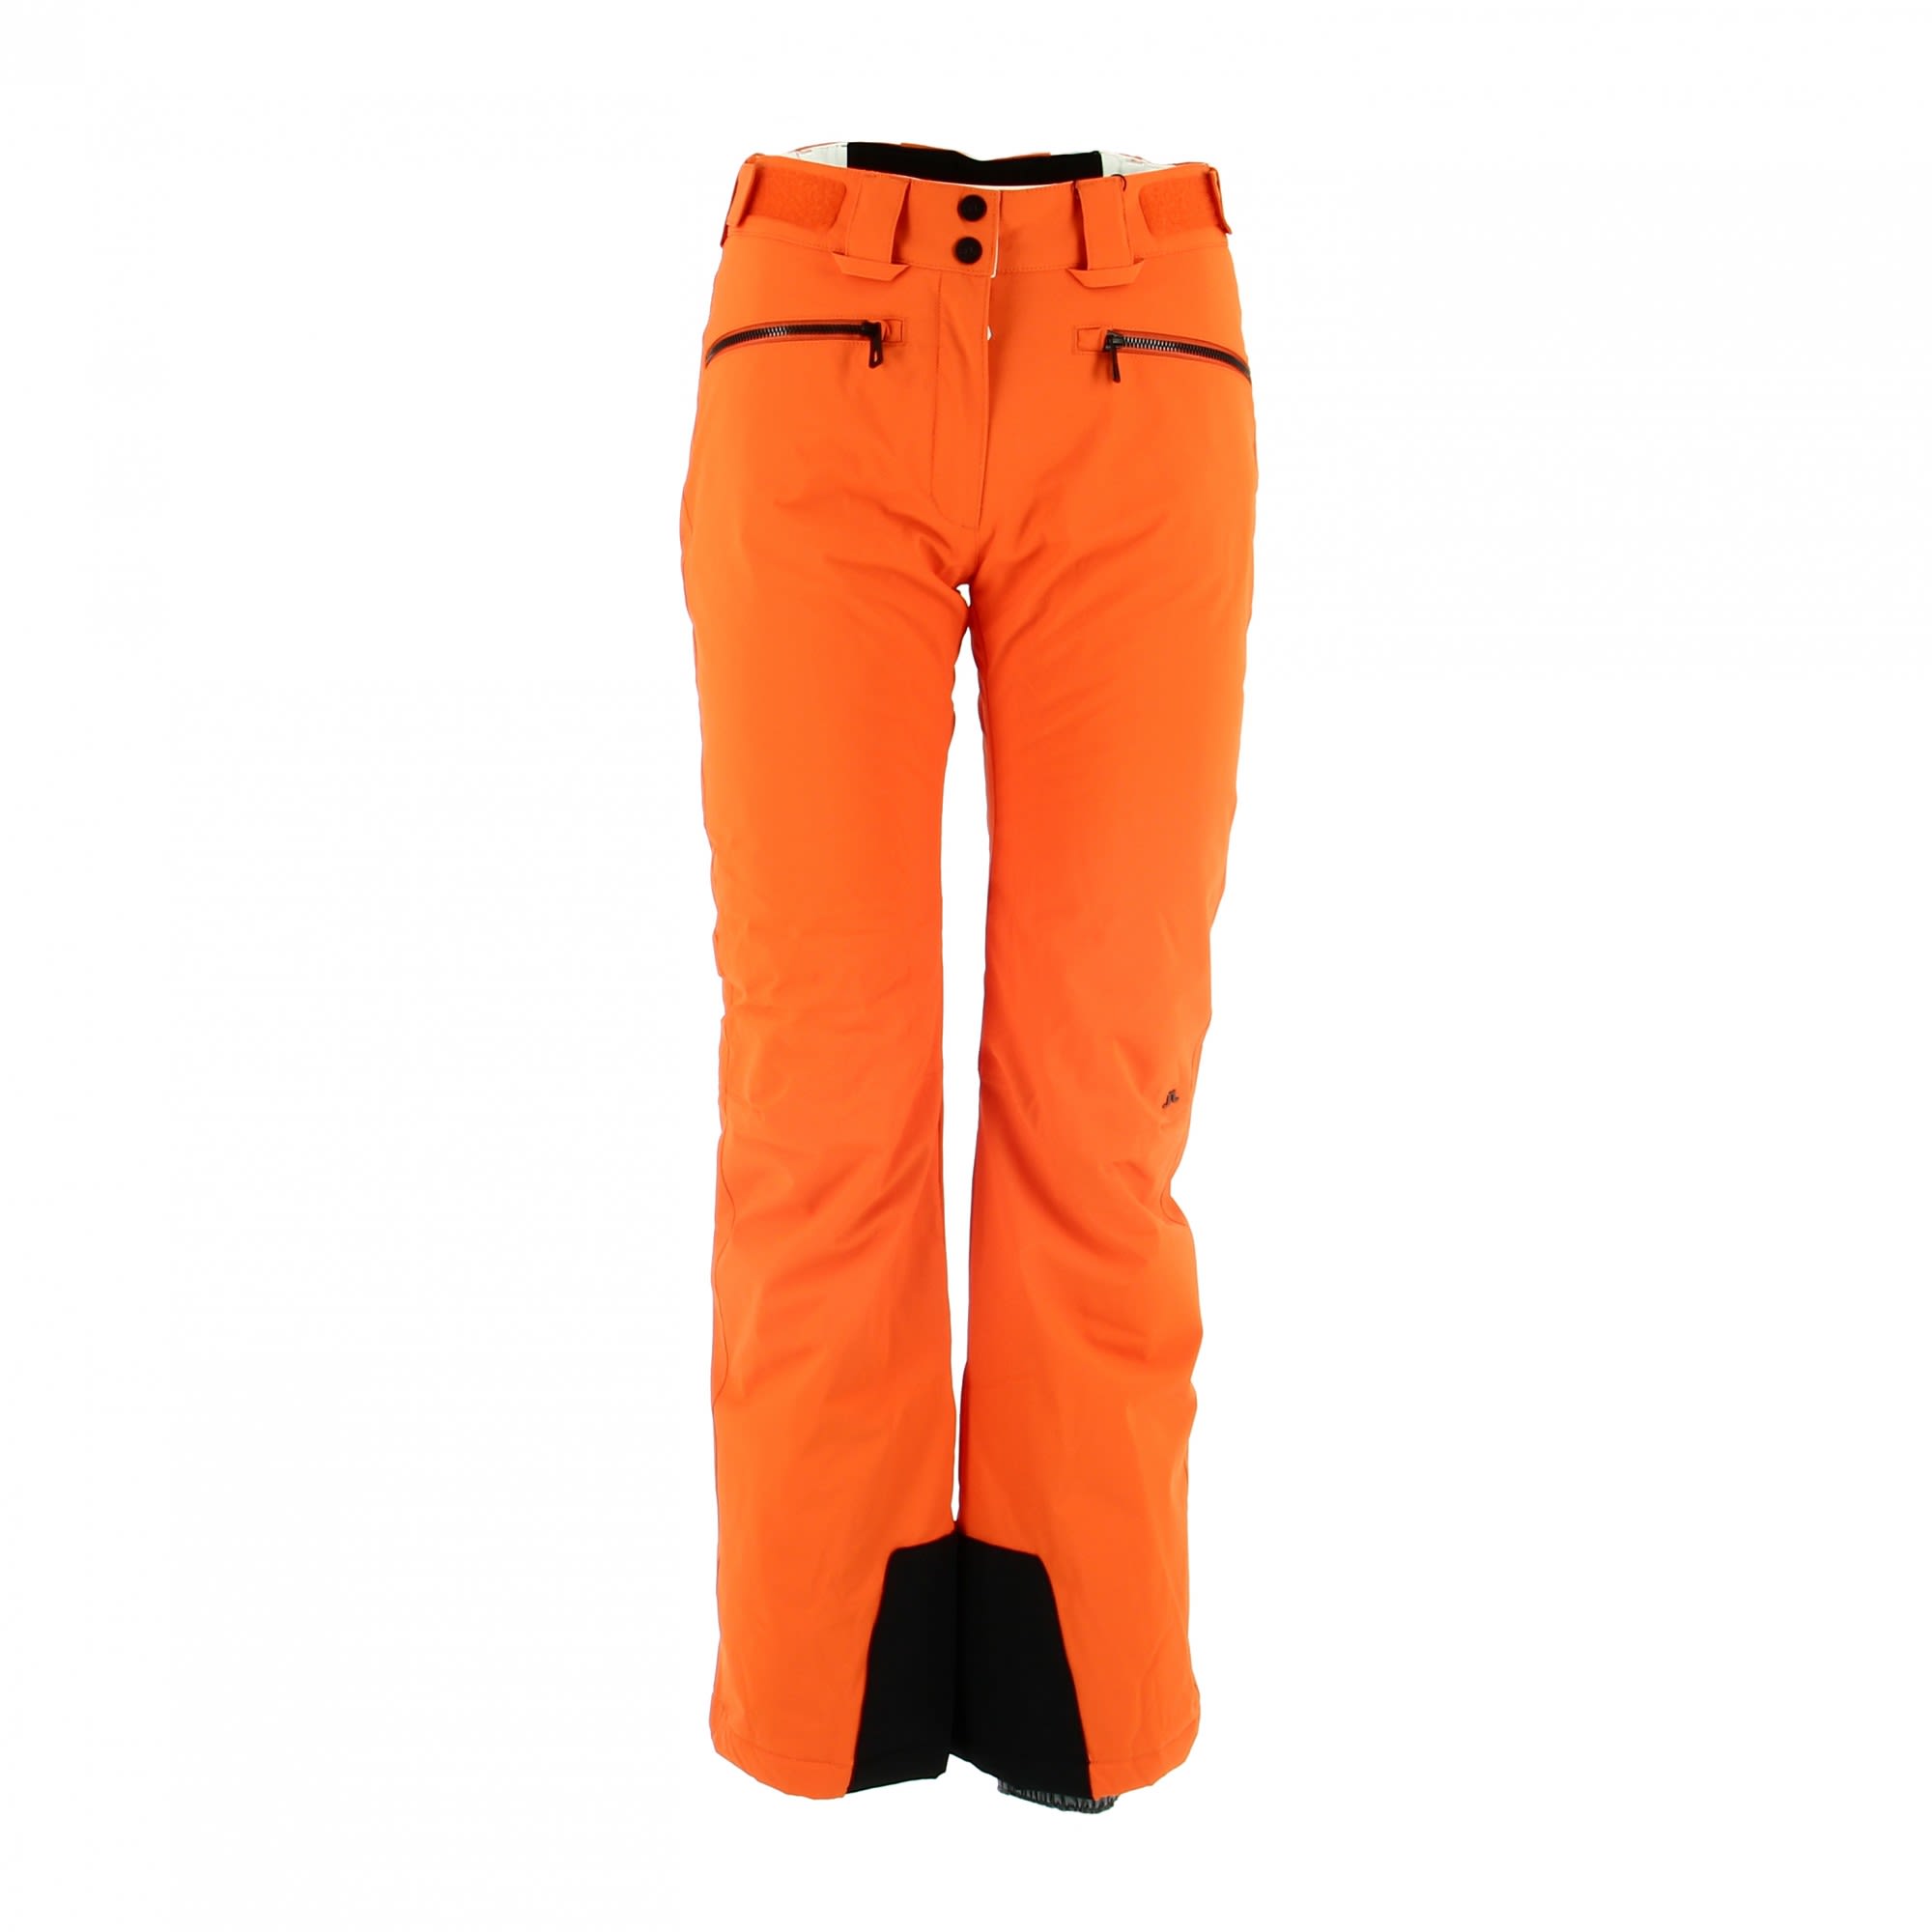 J-Lindeberg Truuli Pants Orange- Female PrimaLoft(R) Softshellhosen- Grsse XS - Farbe Juicy Orange unter J.Lindeberg